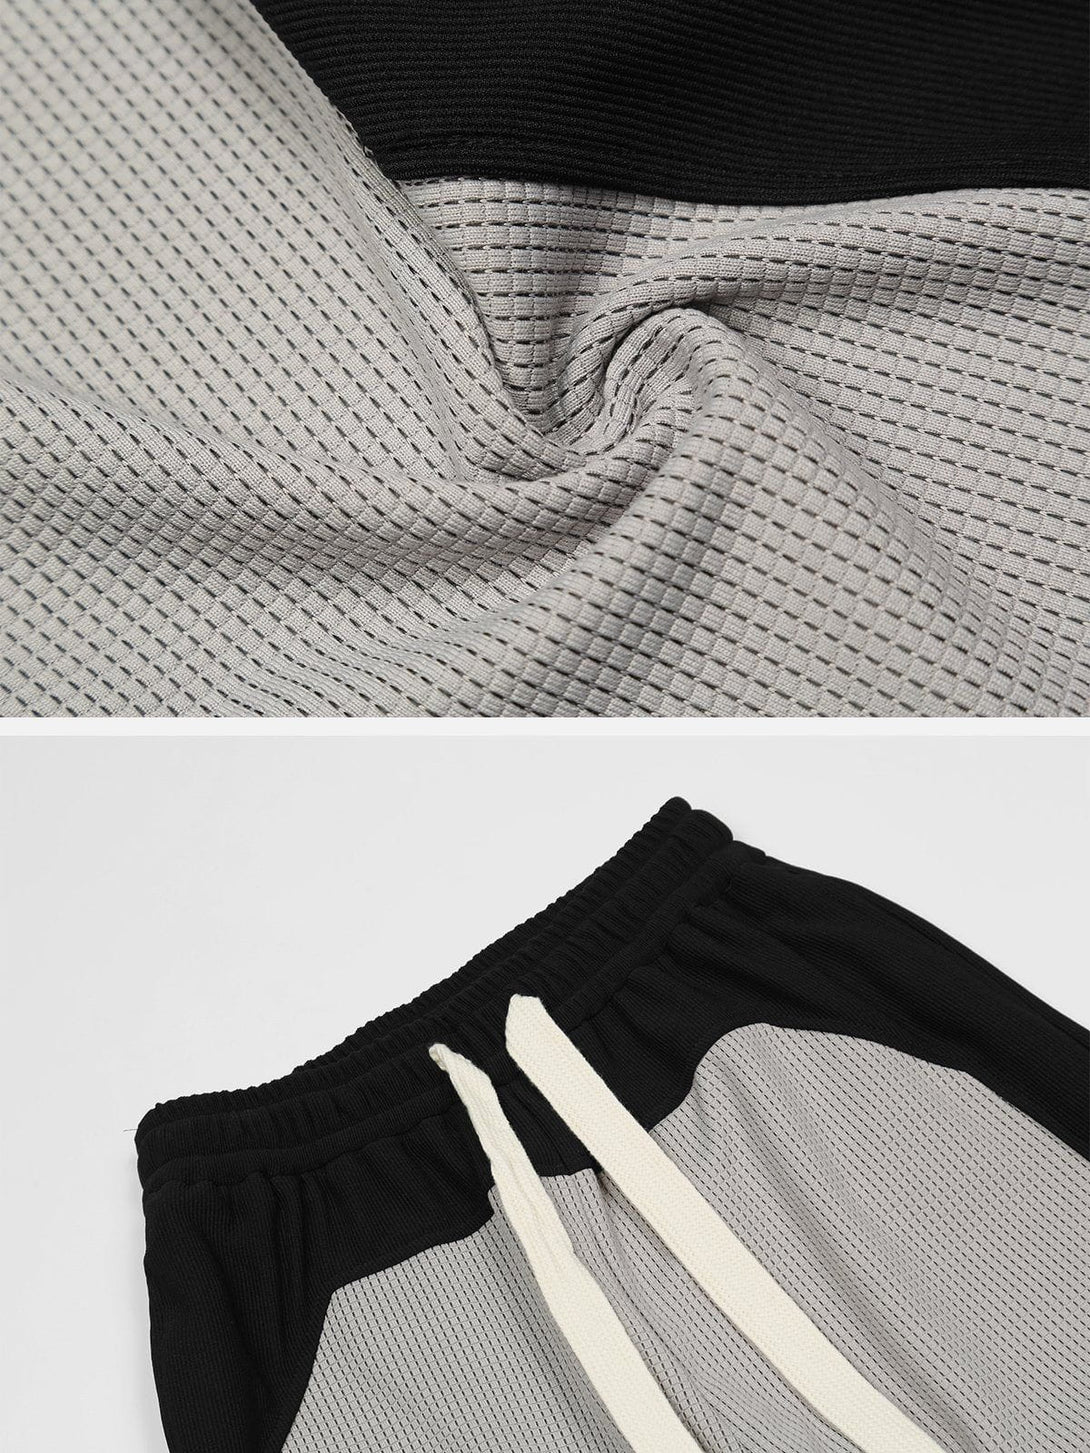 Majesda® - Loose Color Block Pants outfit ideas streetwear fashion